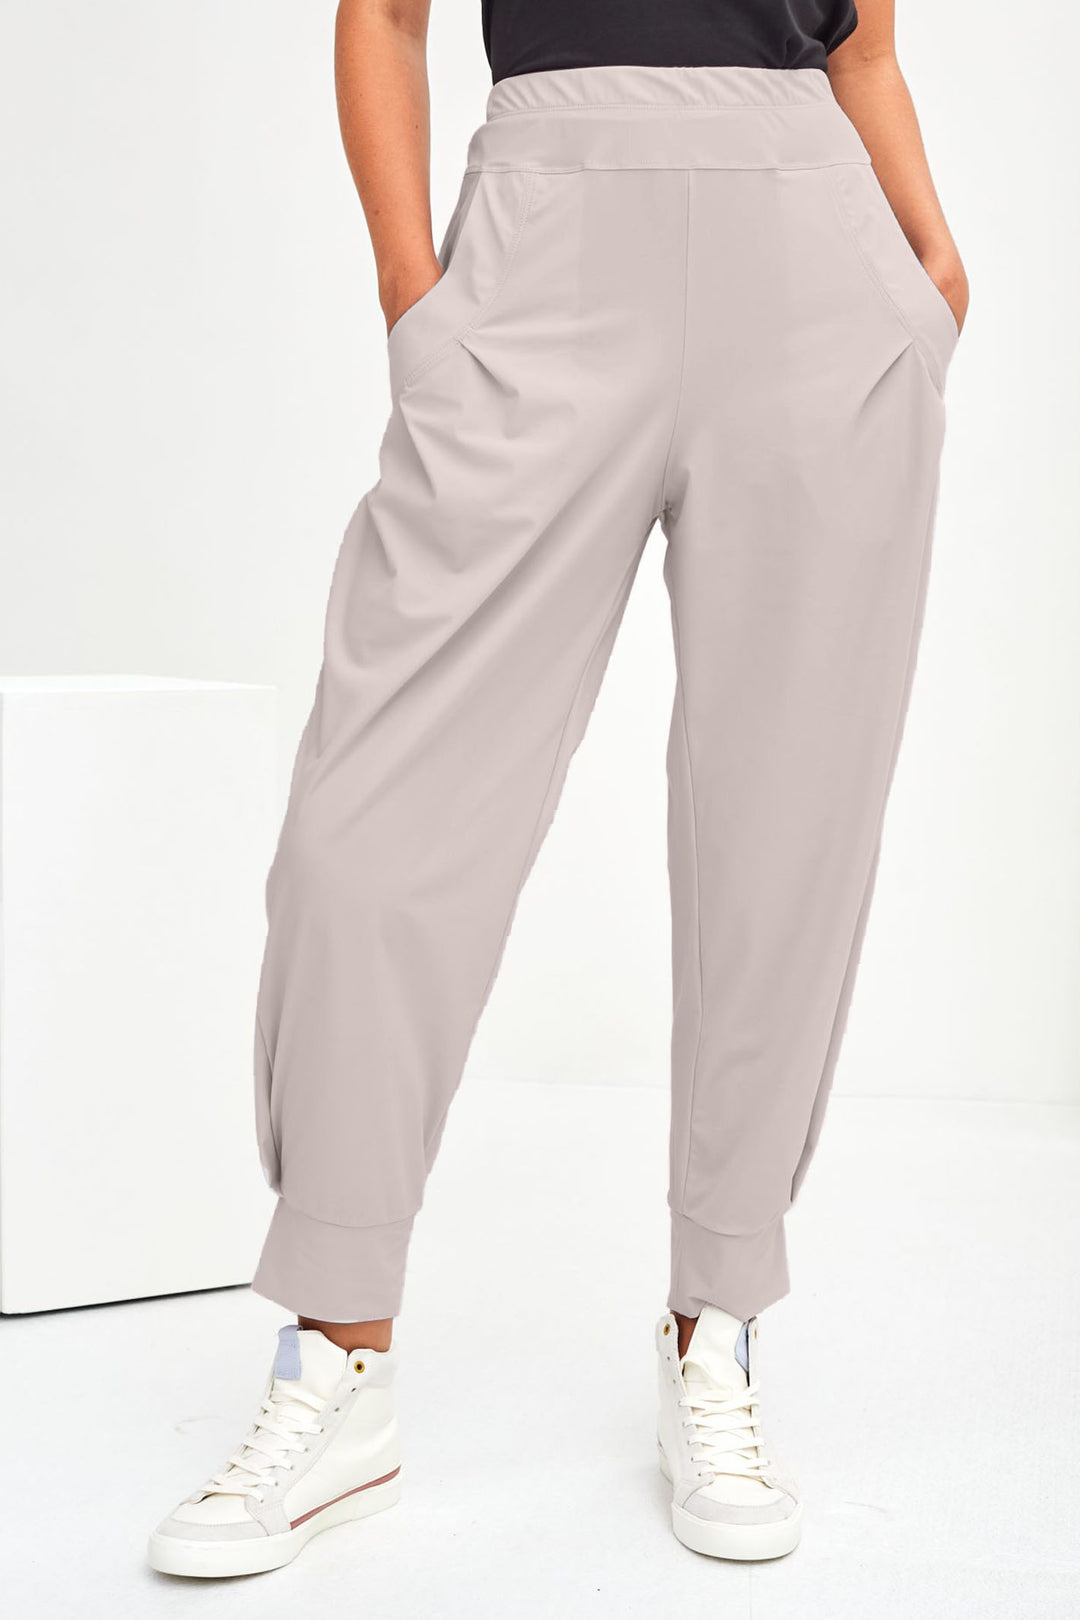 Naya NAS24101 Mink Tuck Trousers - Olivia Grace Fashion